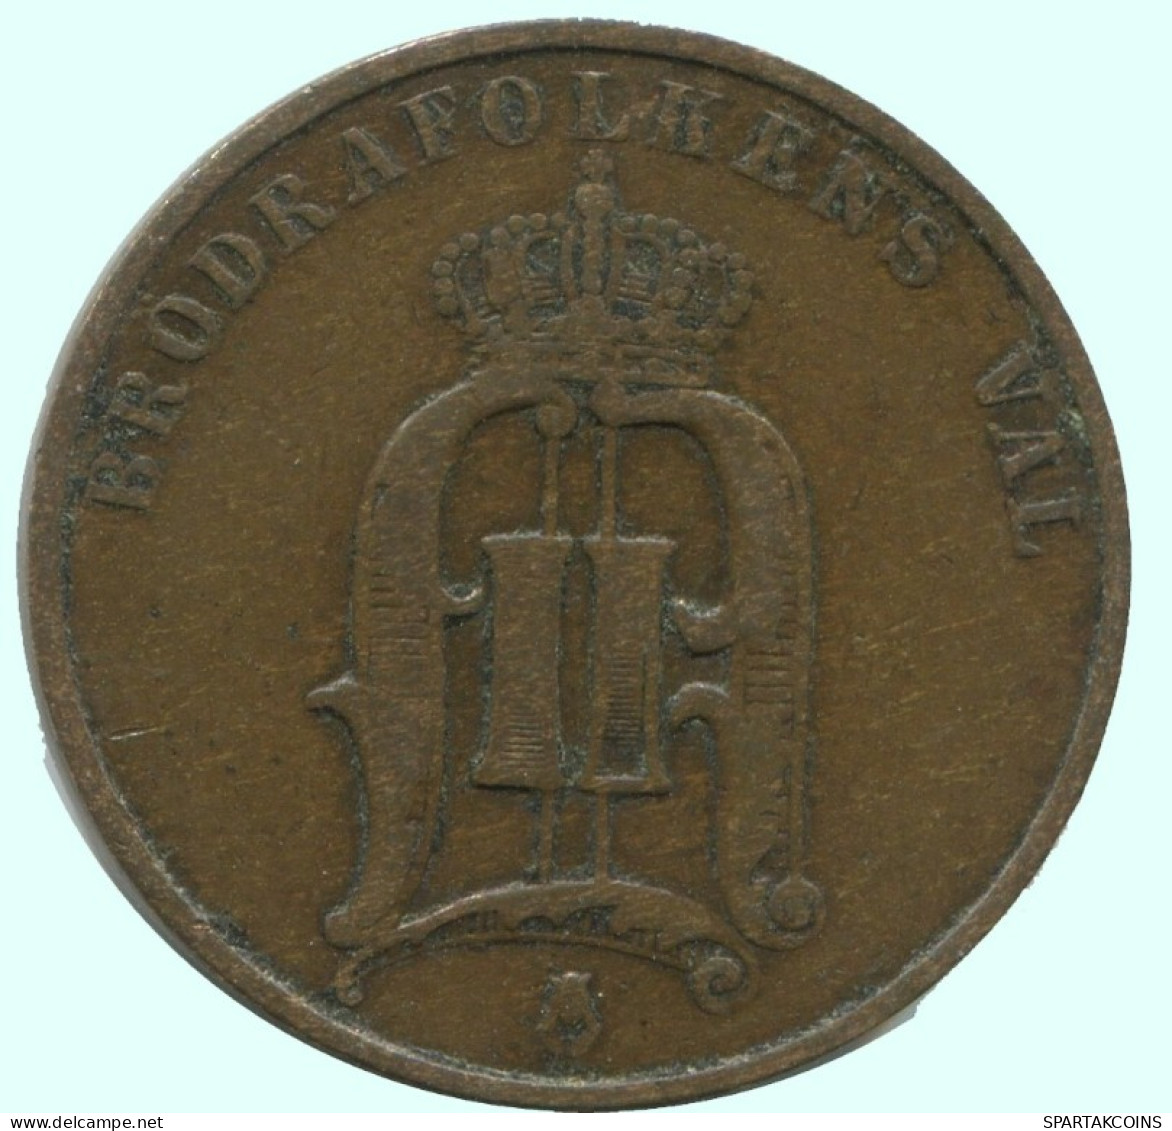 2 ORE 1889 SWEDEN Coin #AC930.2.U.A - Sweden